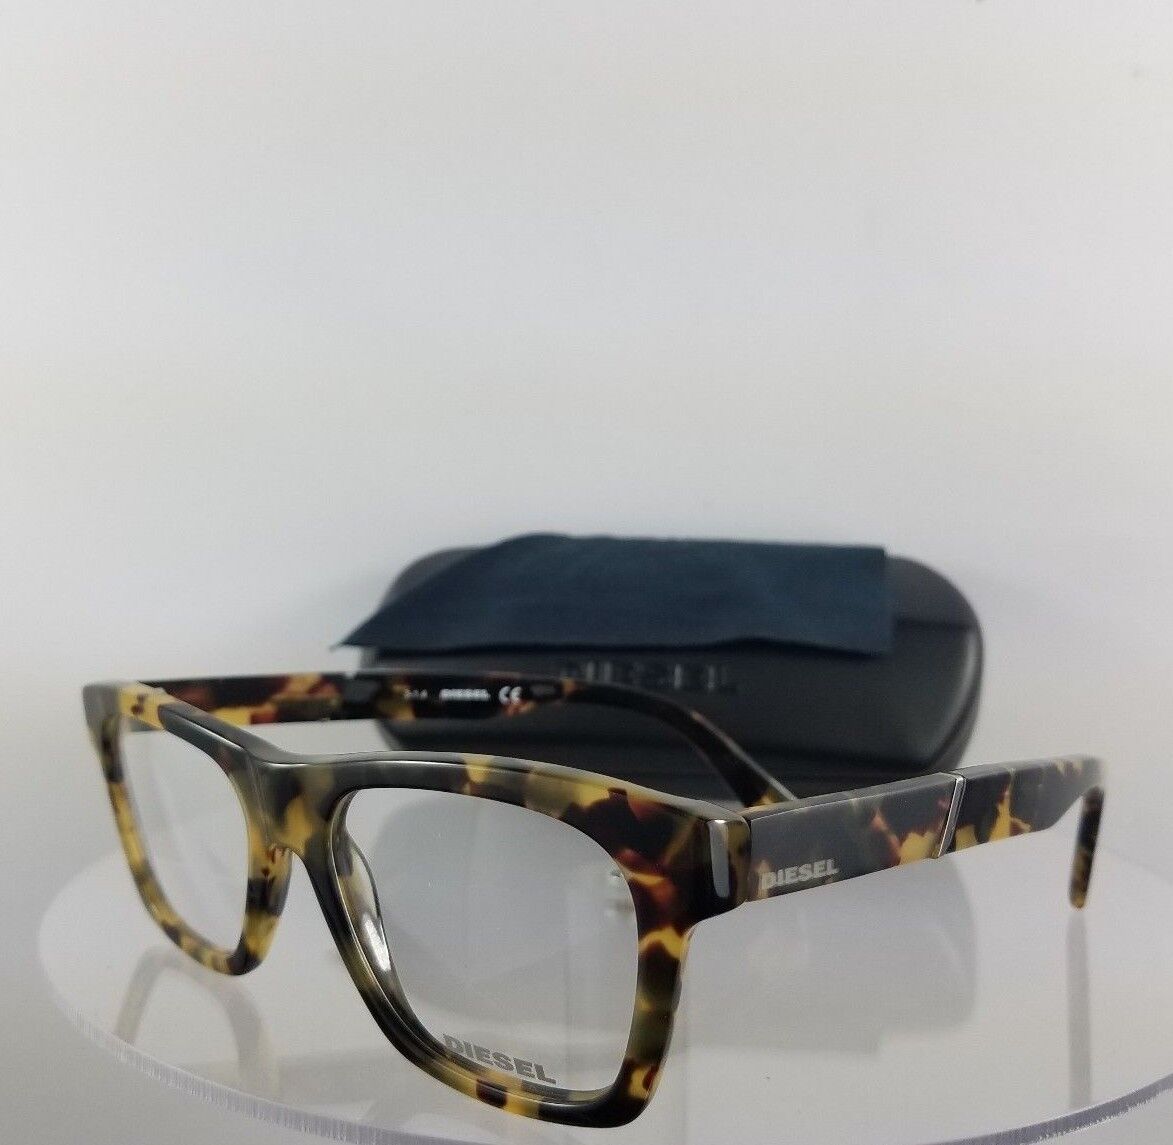 100% Authentic Brand New Diesel Eyeglasses DL 5092 Color 053 DL5092